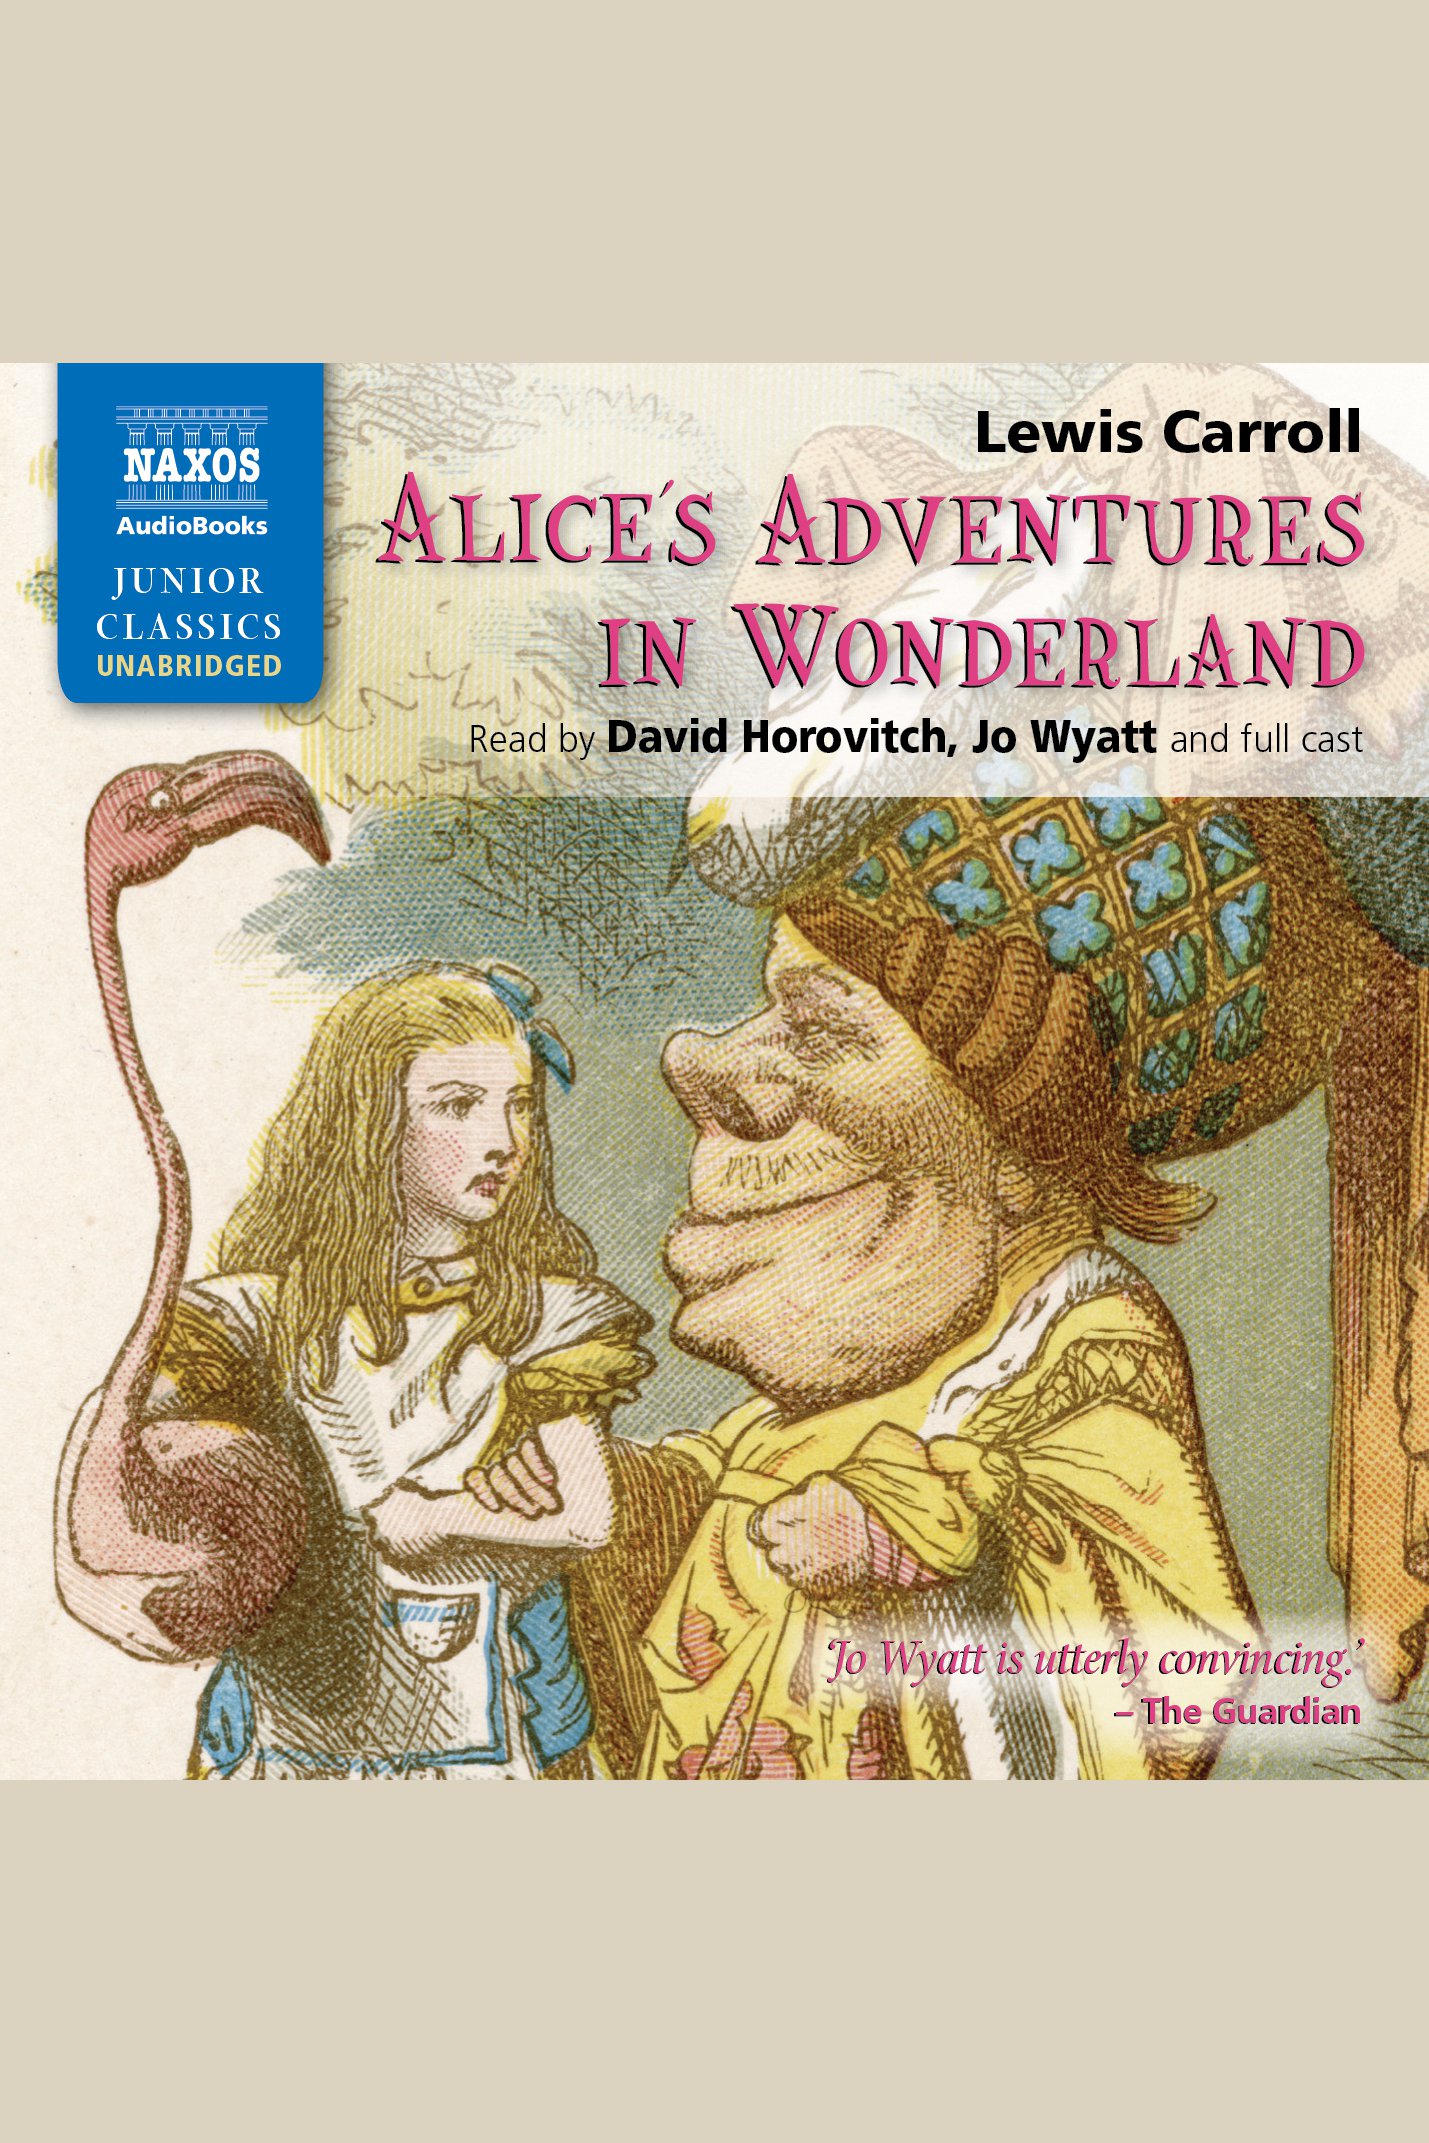 Alice's adventures in wonderland cover image